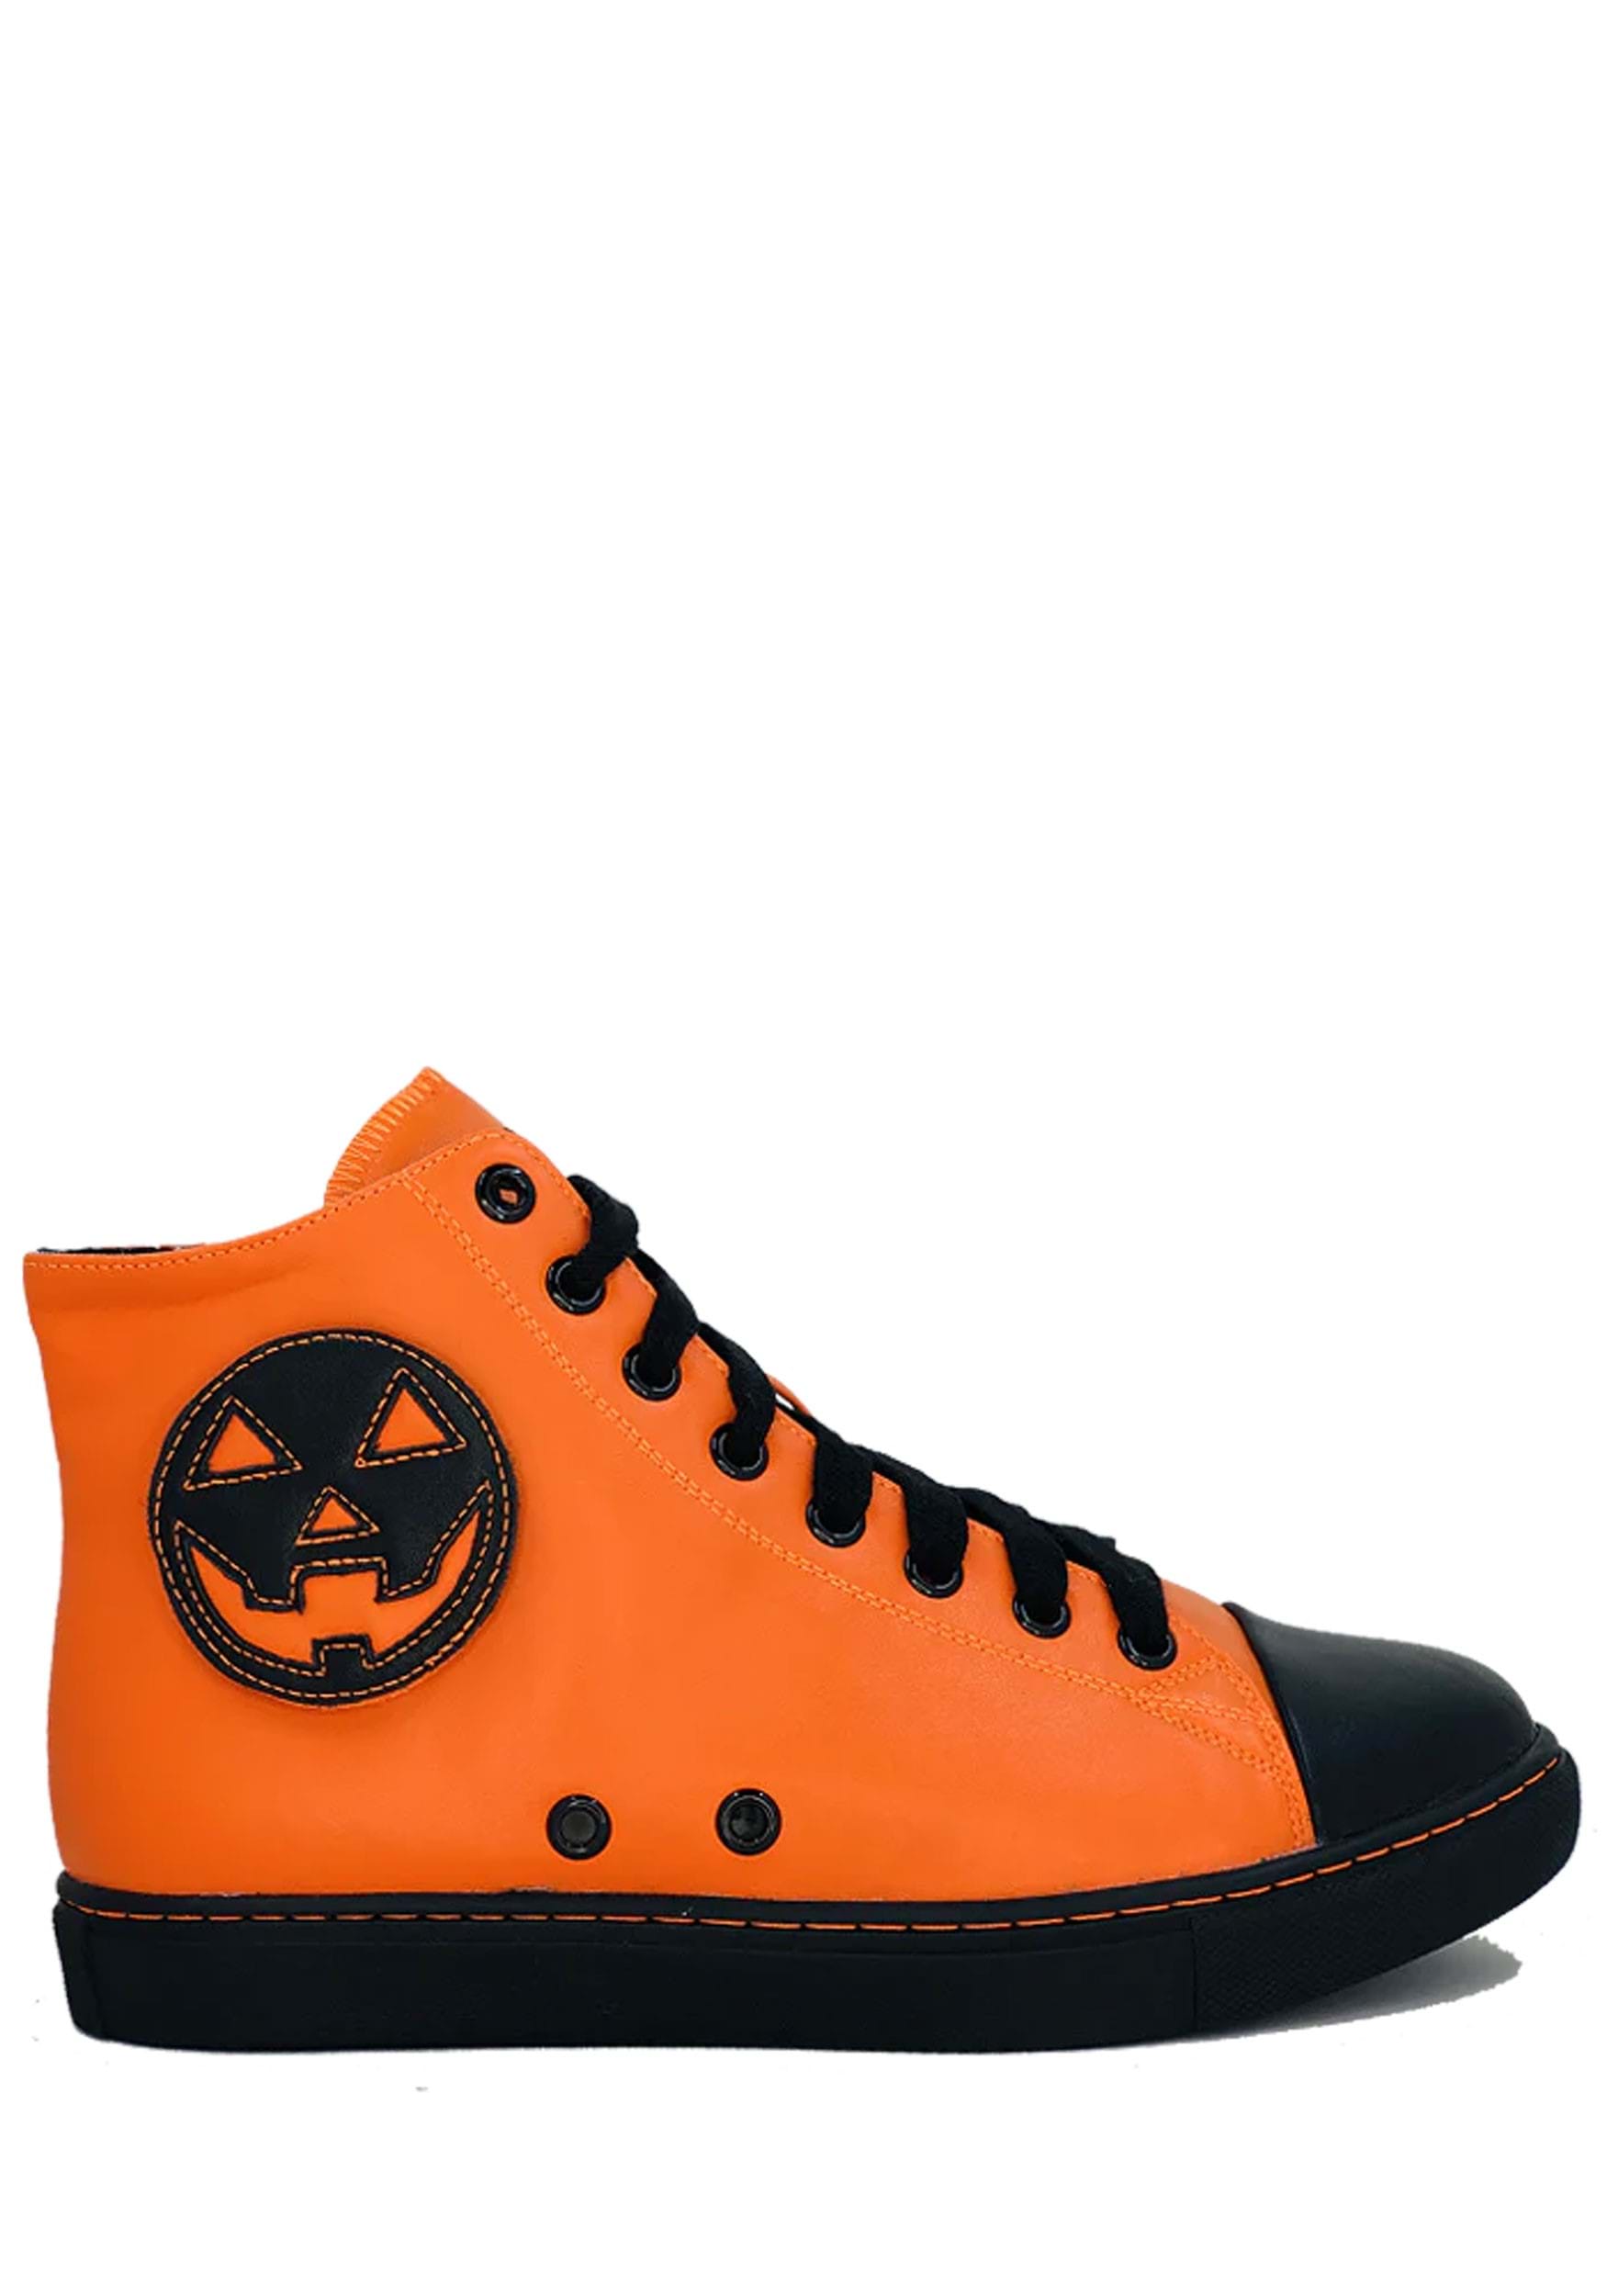 Image of Women's Orange Pumpkin Chelsea Jack High Top Sneaker | Halloween Footwear ID SVCHELSEAJACK-OR-14